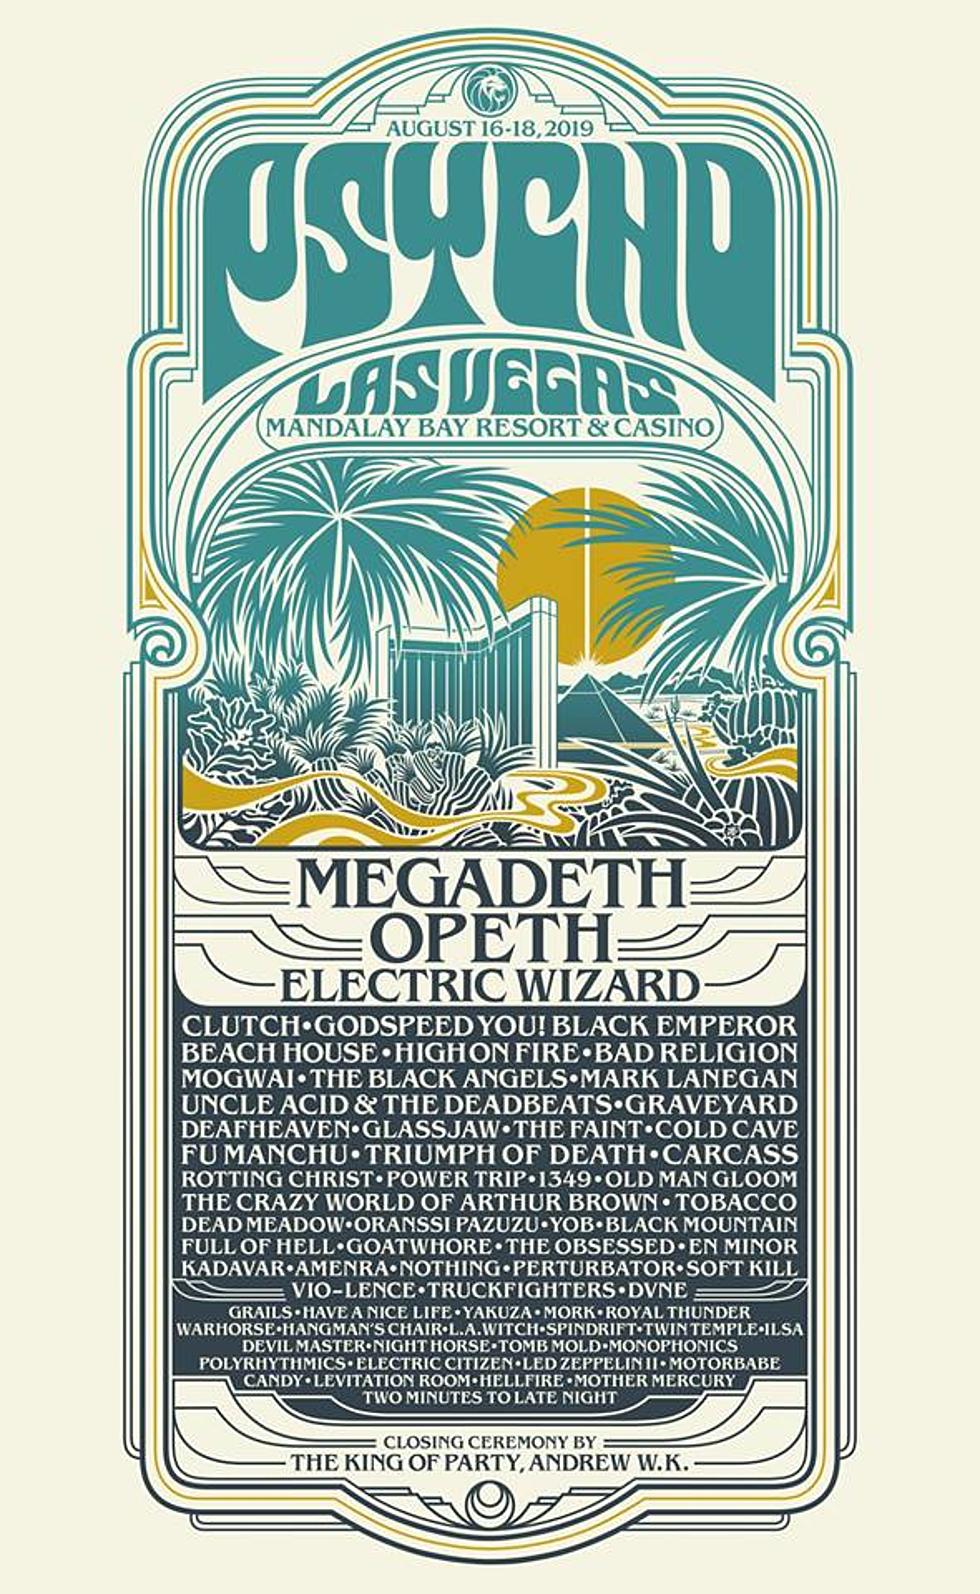 Psycho Las Vegas full lineup (Megadeth, Opeth, Mogwai, Violence, HANL